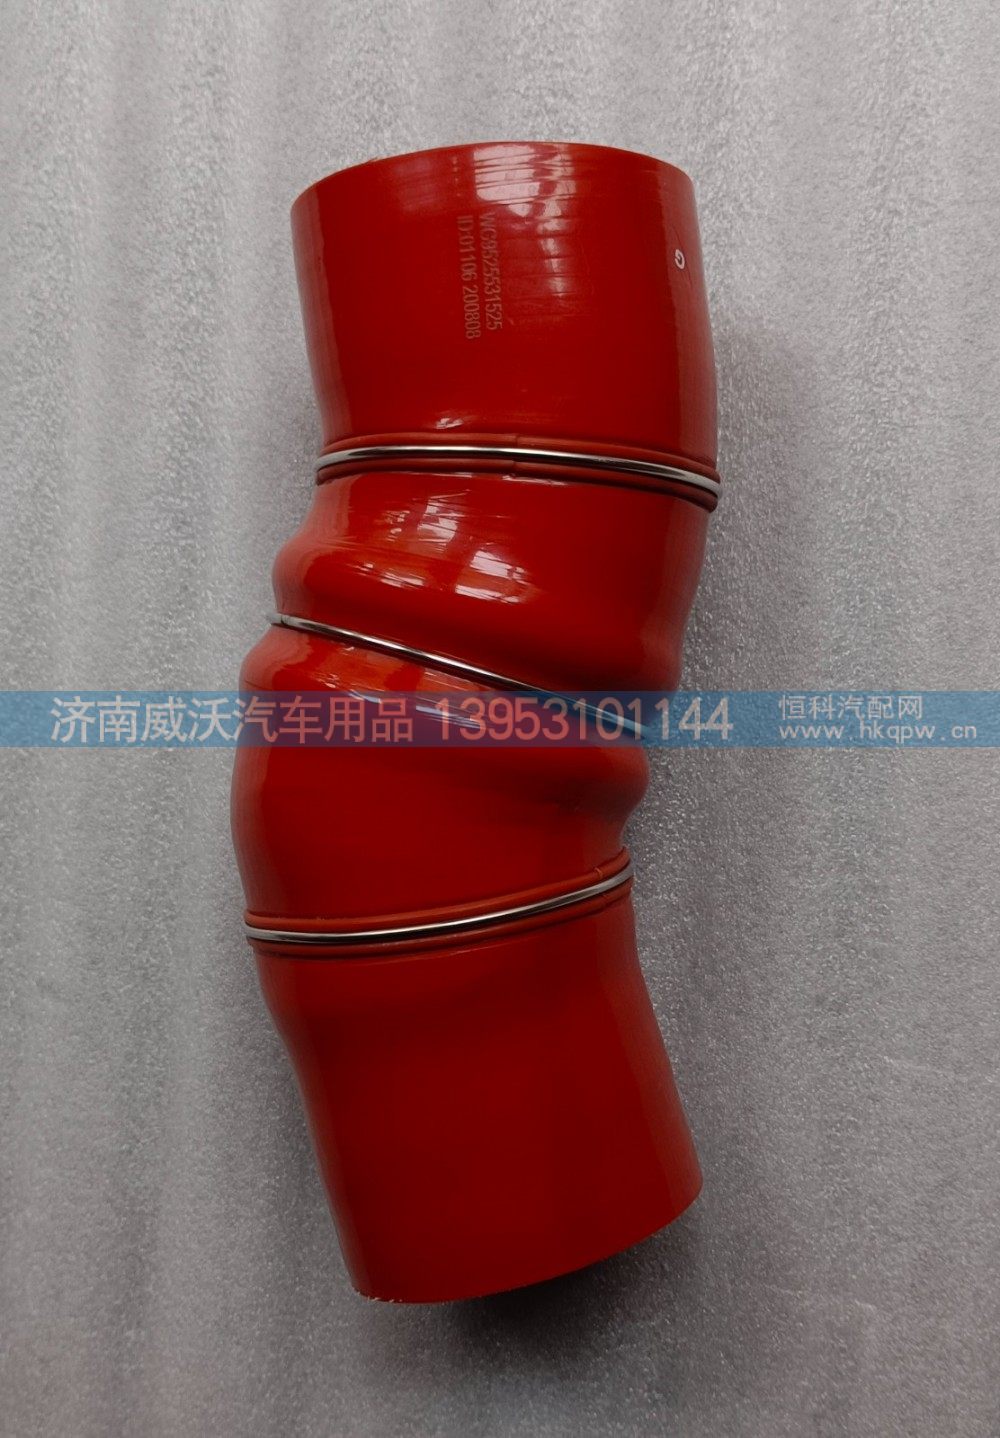 WG9525531525,中冷器胶管,济南市威沃汽车用品有限公司